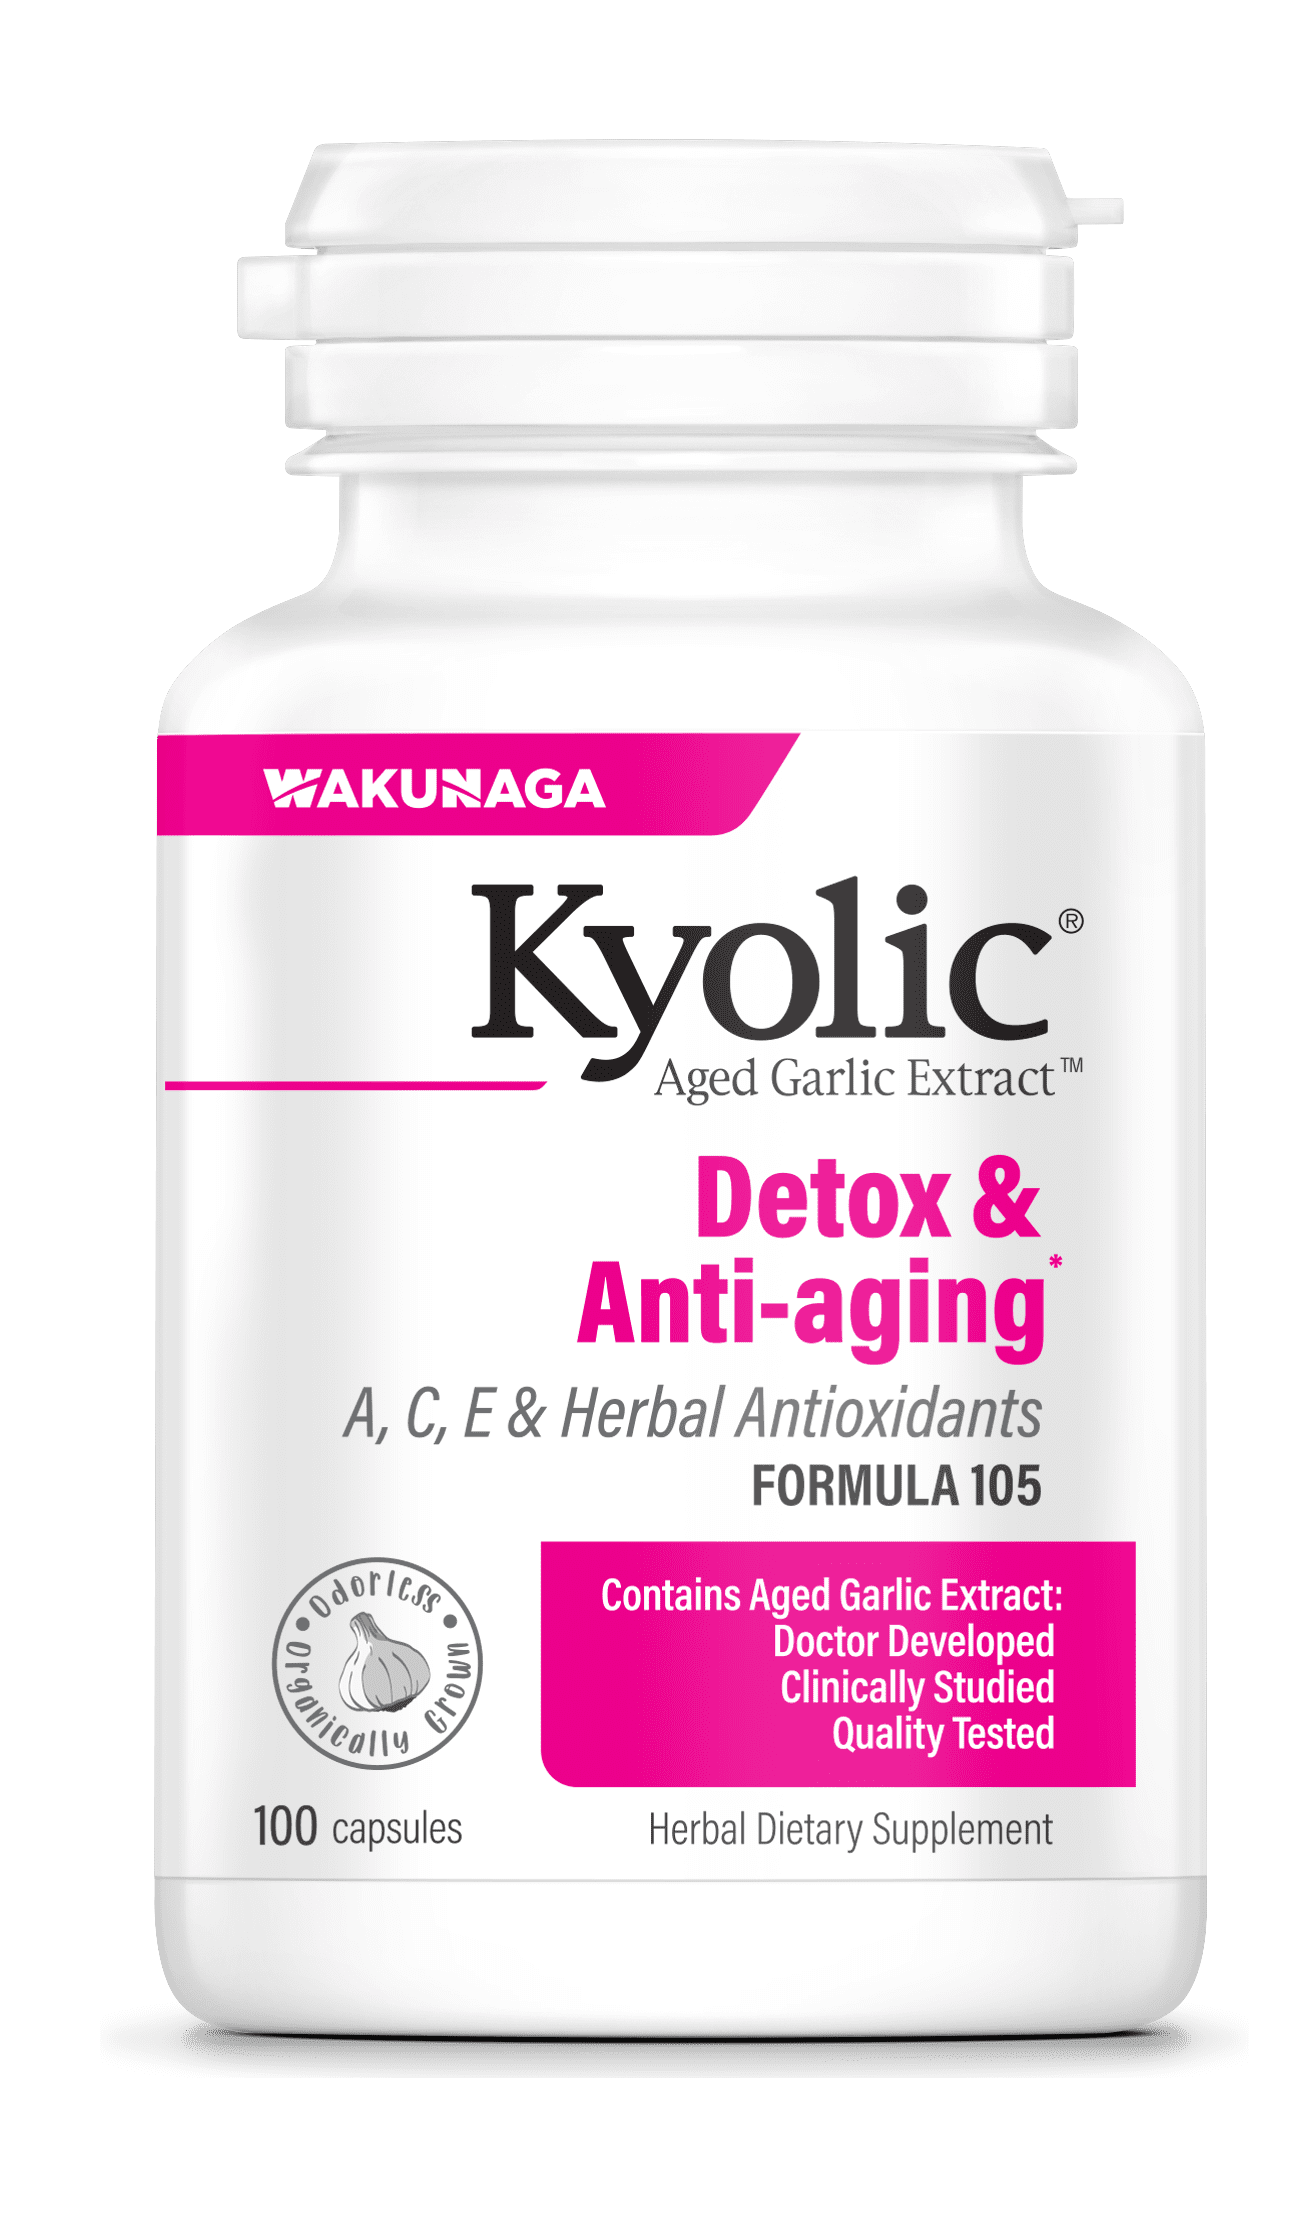 Kyolic® AGE Detox and Anti-Aging Formula 105